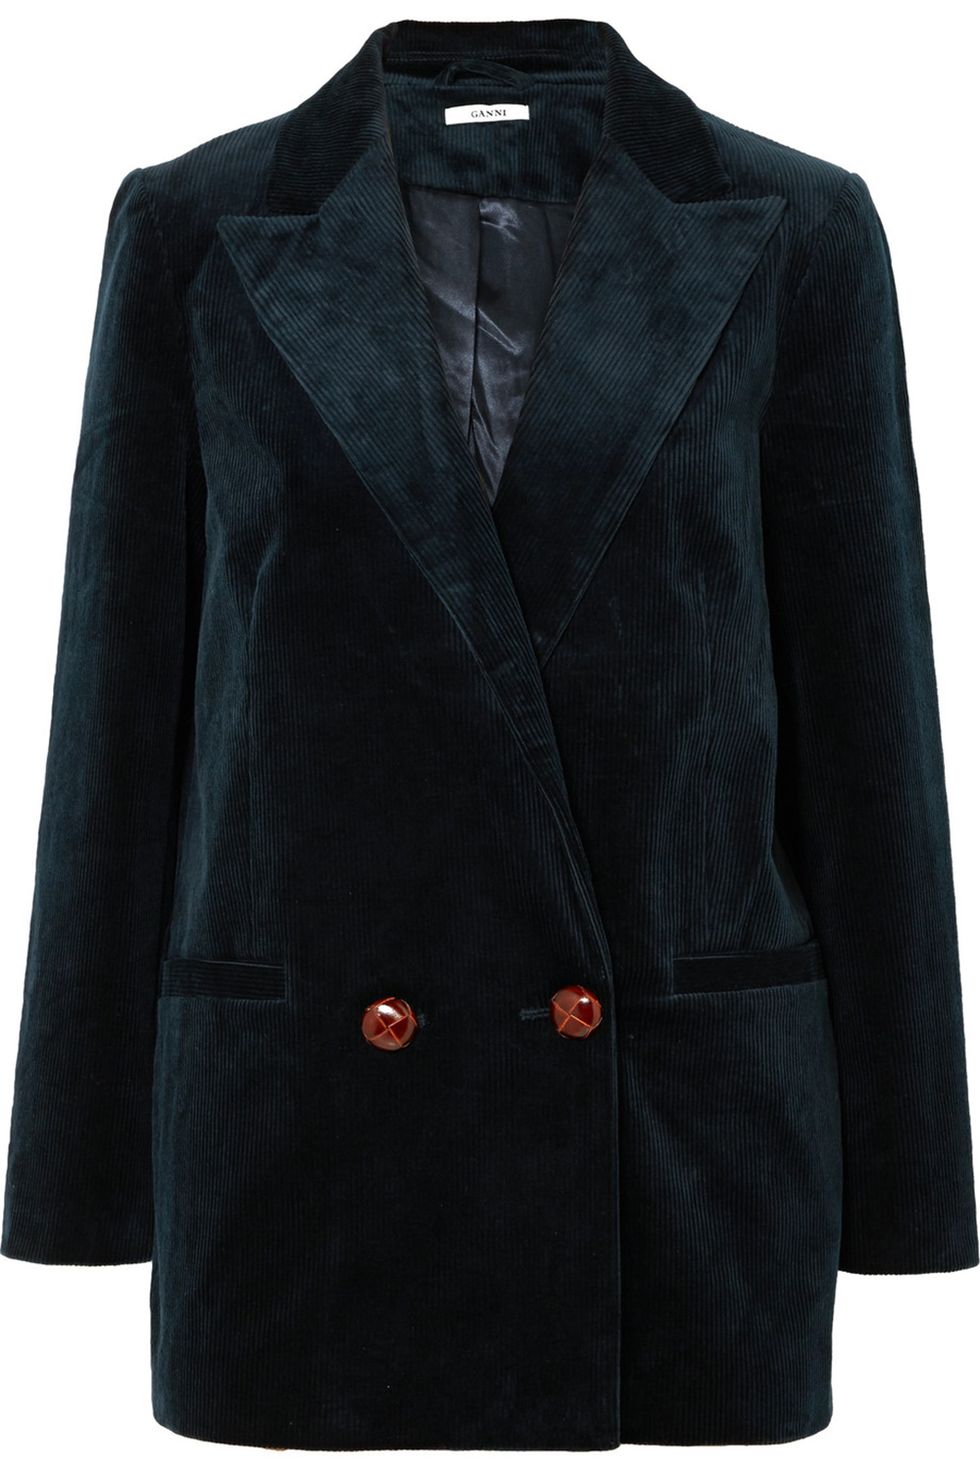 Clothing, Outerwear, Black, Jacket, Sleeve, Coat, Overcoat, Blazer, Collar, Suit, 